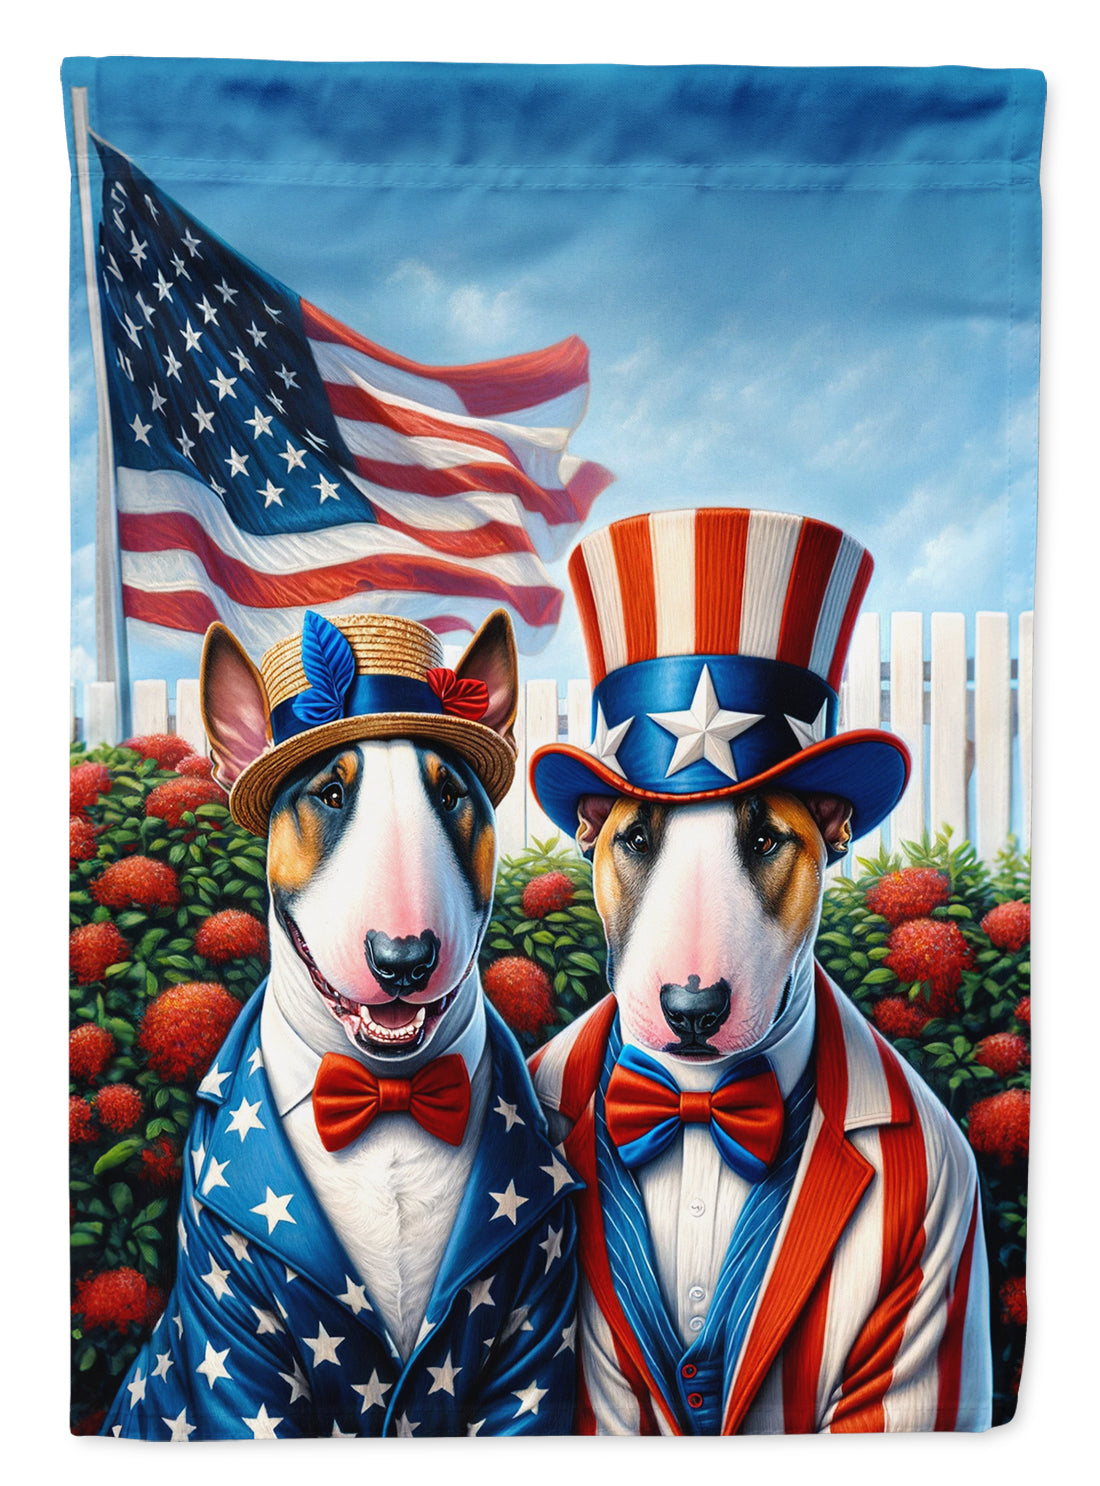 Buy this All American English Bull Terrier Garden Flag